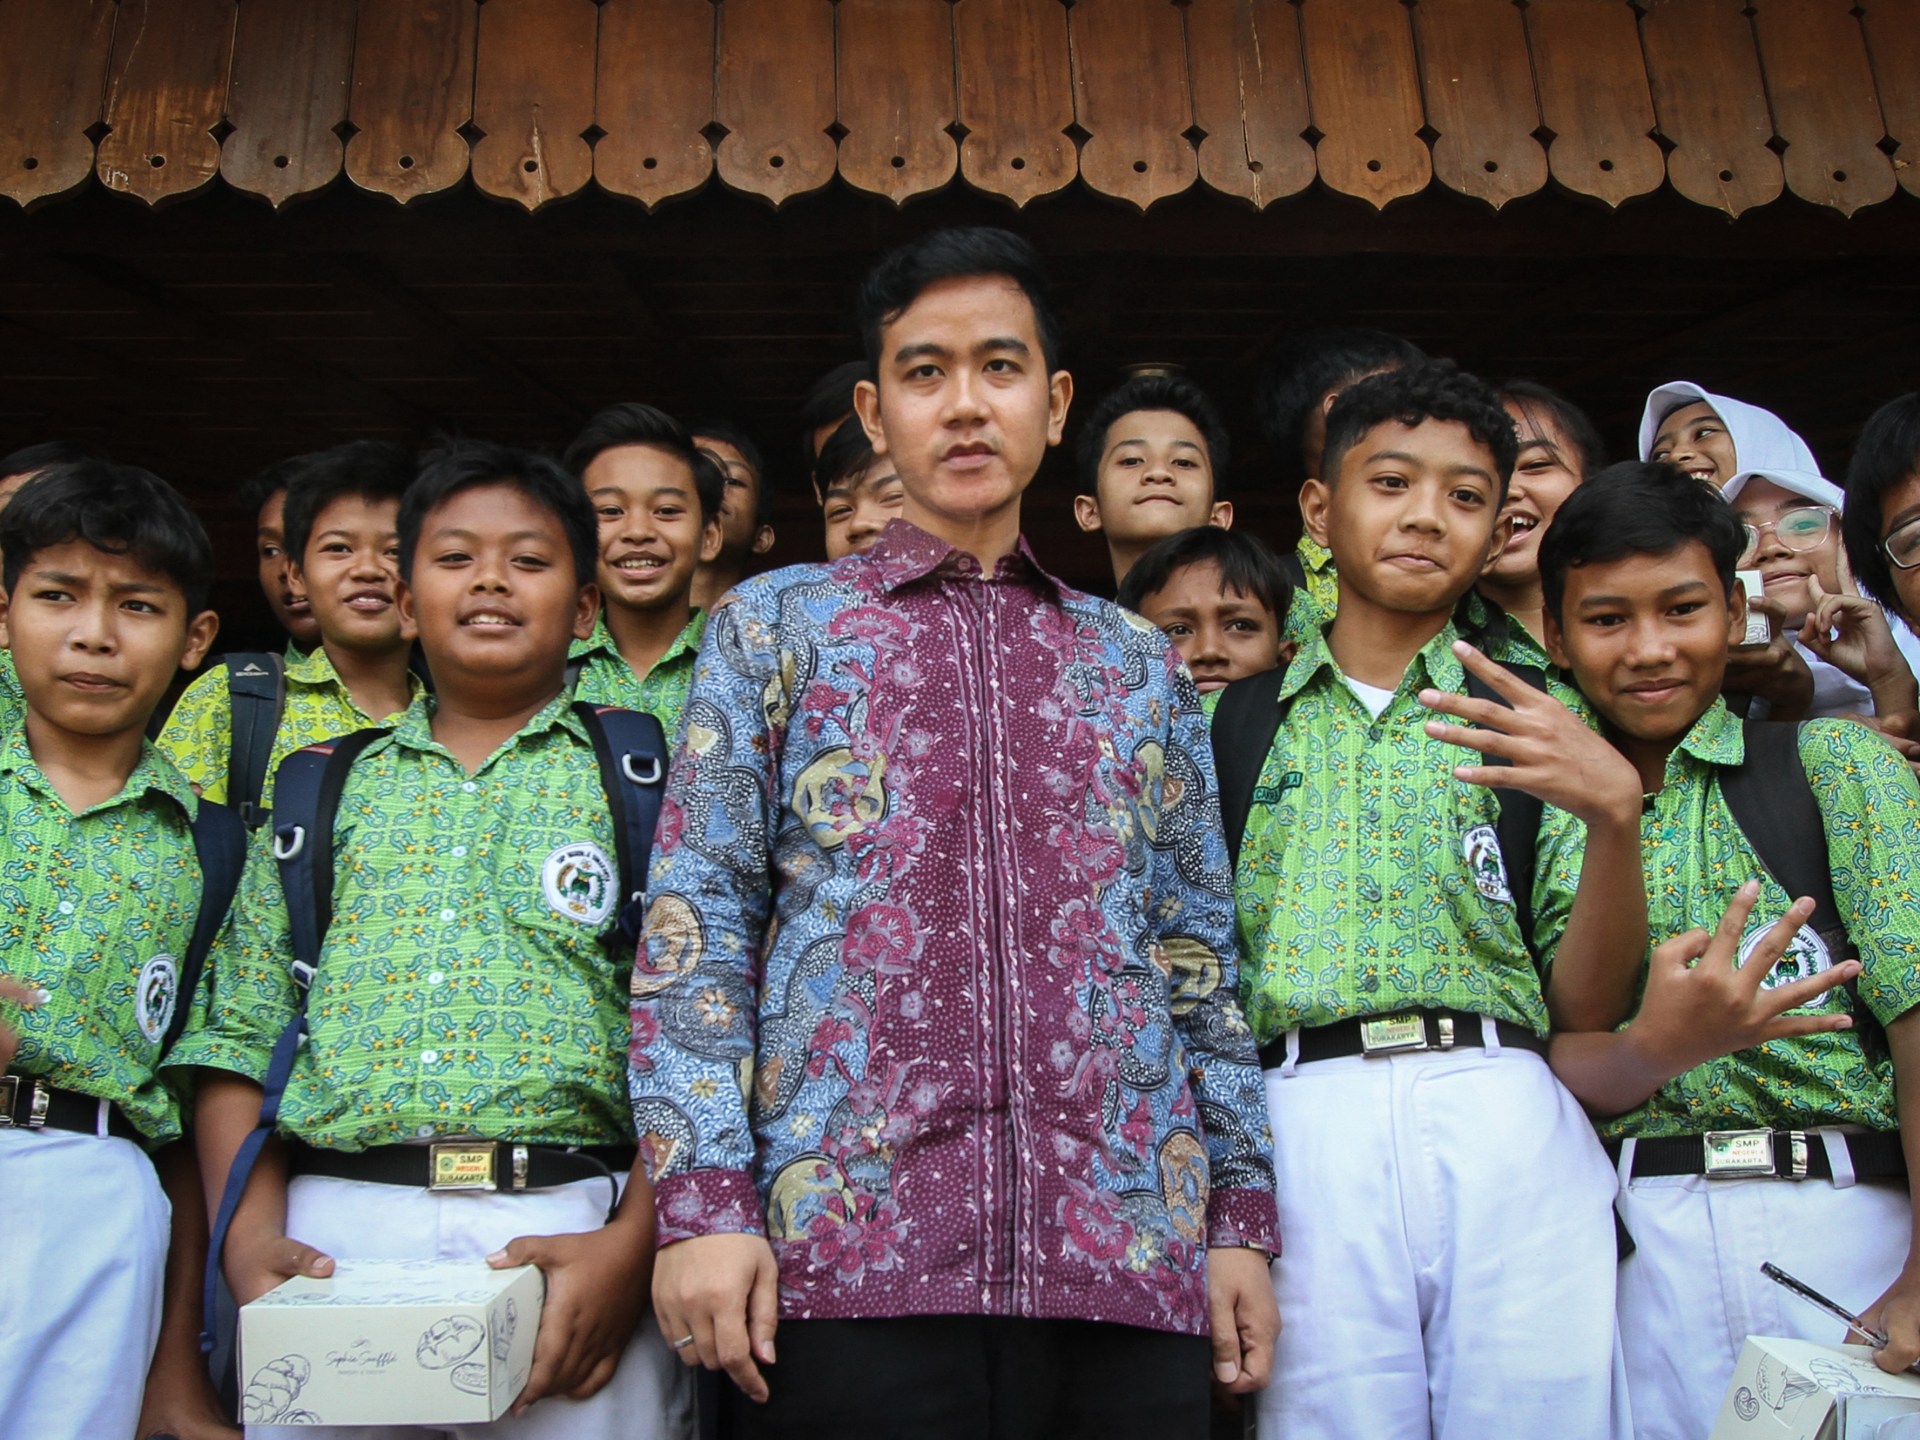 Prabowo picks Jokowi’s son as running mate in Indonesia presidential bid